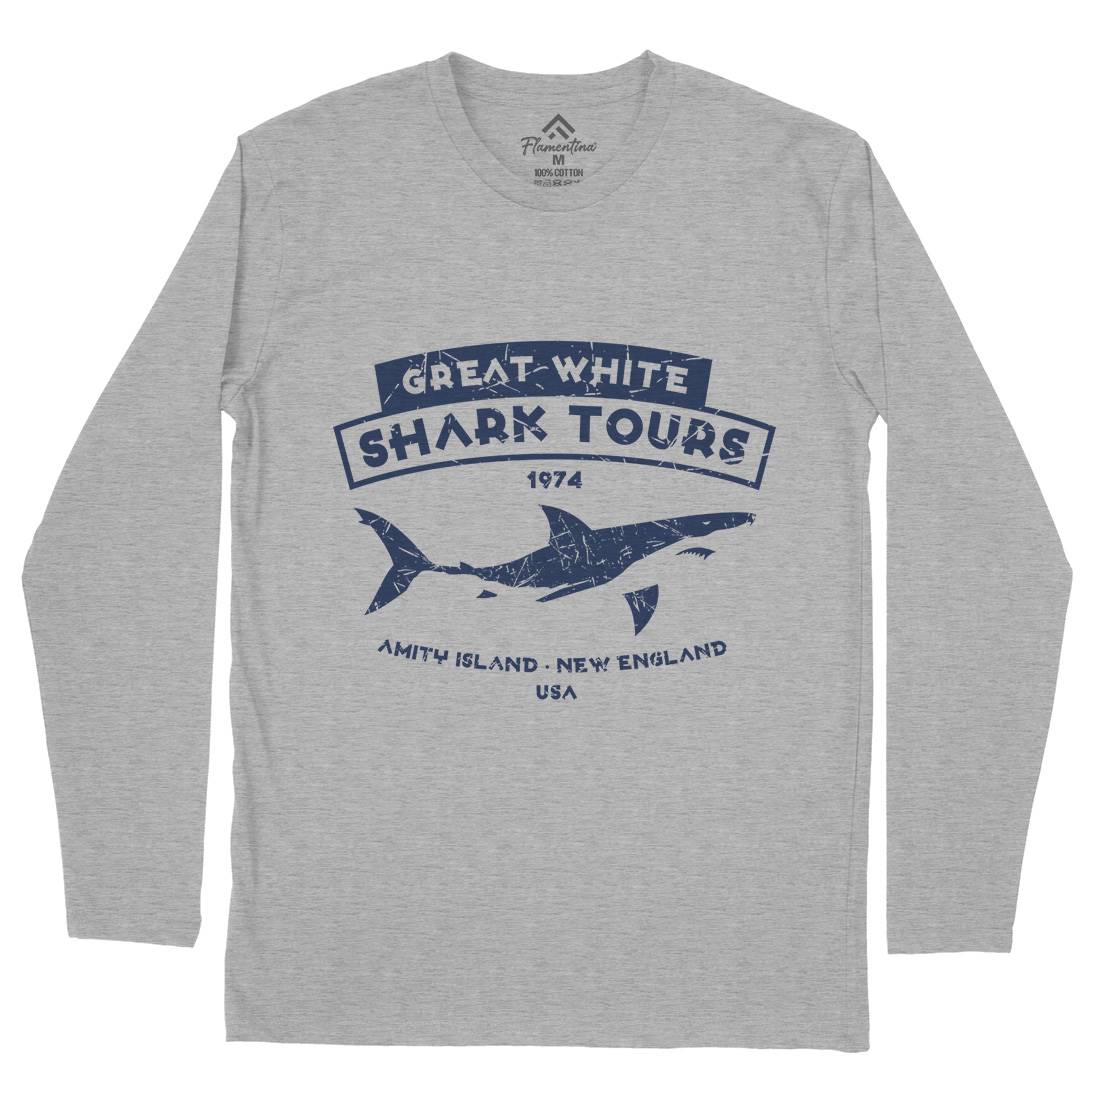 Great White Shark Tours Mens Long Sleeve T-Shirt Navy D348